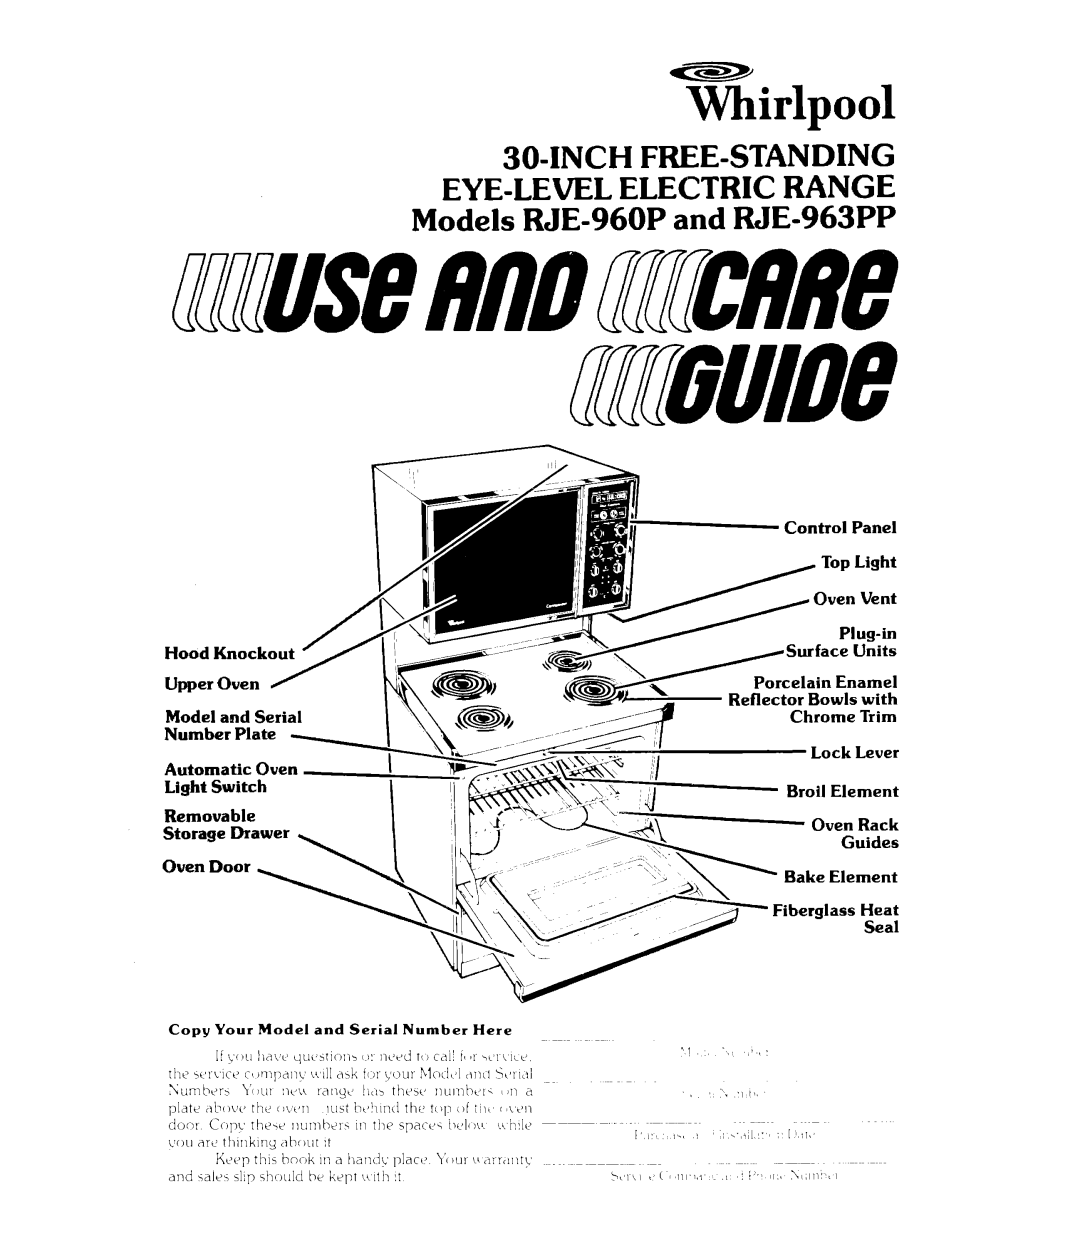 Whirlpool manual TKirlpool, So-Inch Free-Standing Eye-Levelelectric Range, Models RJE-960Pand RJE-963PP 